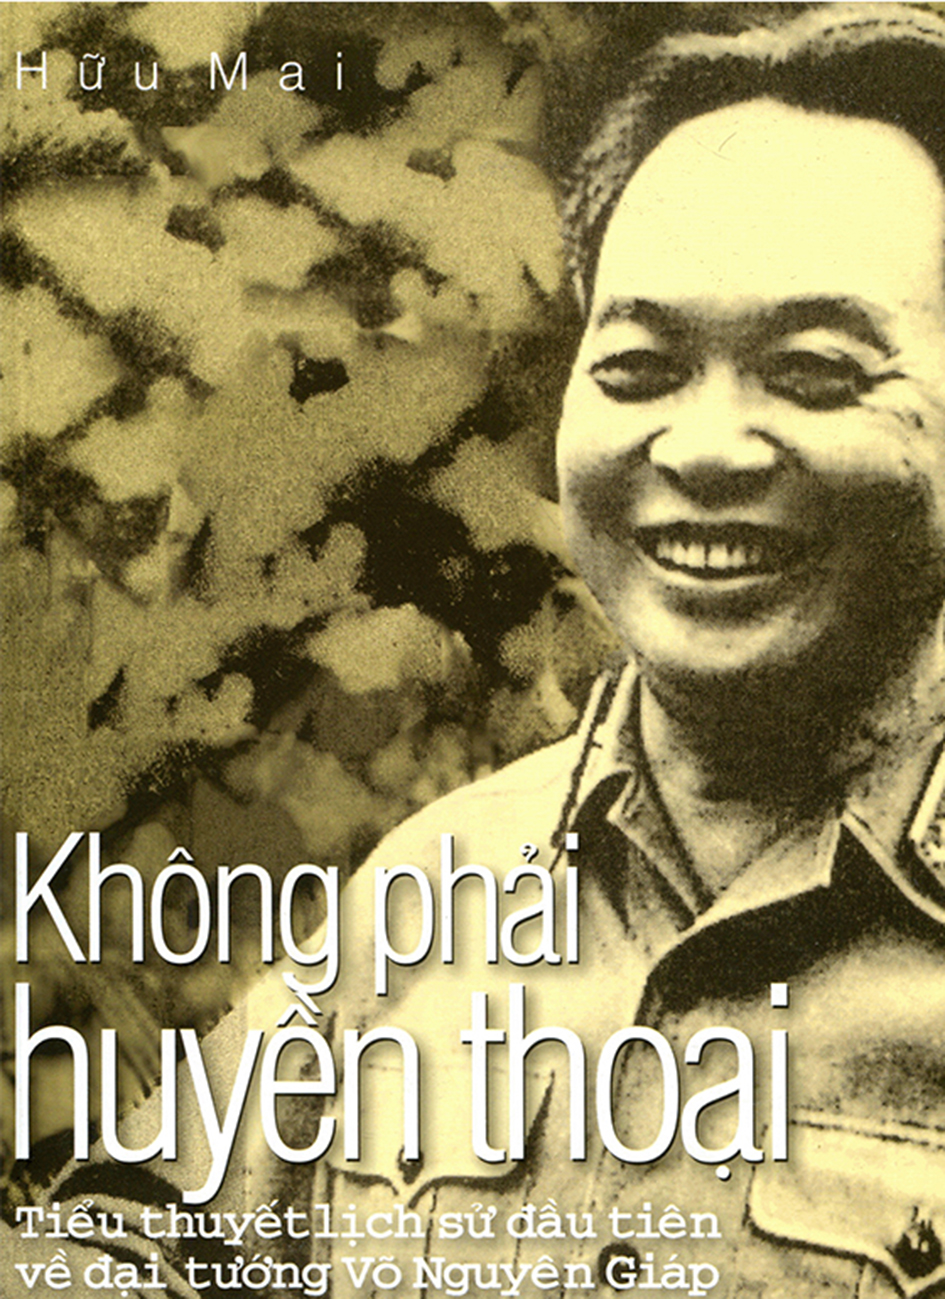 khong phai huyen thoai